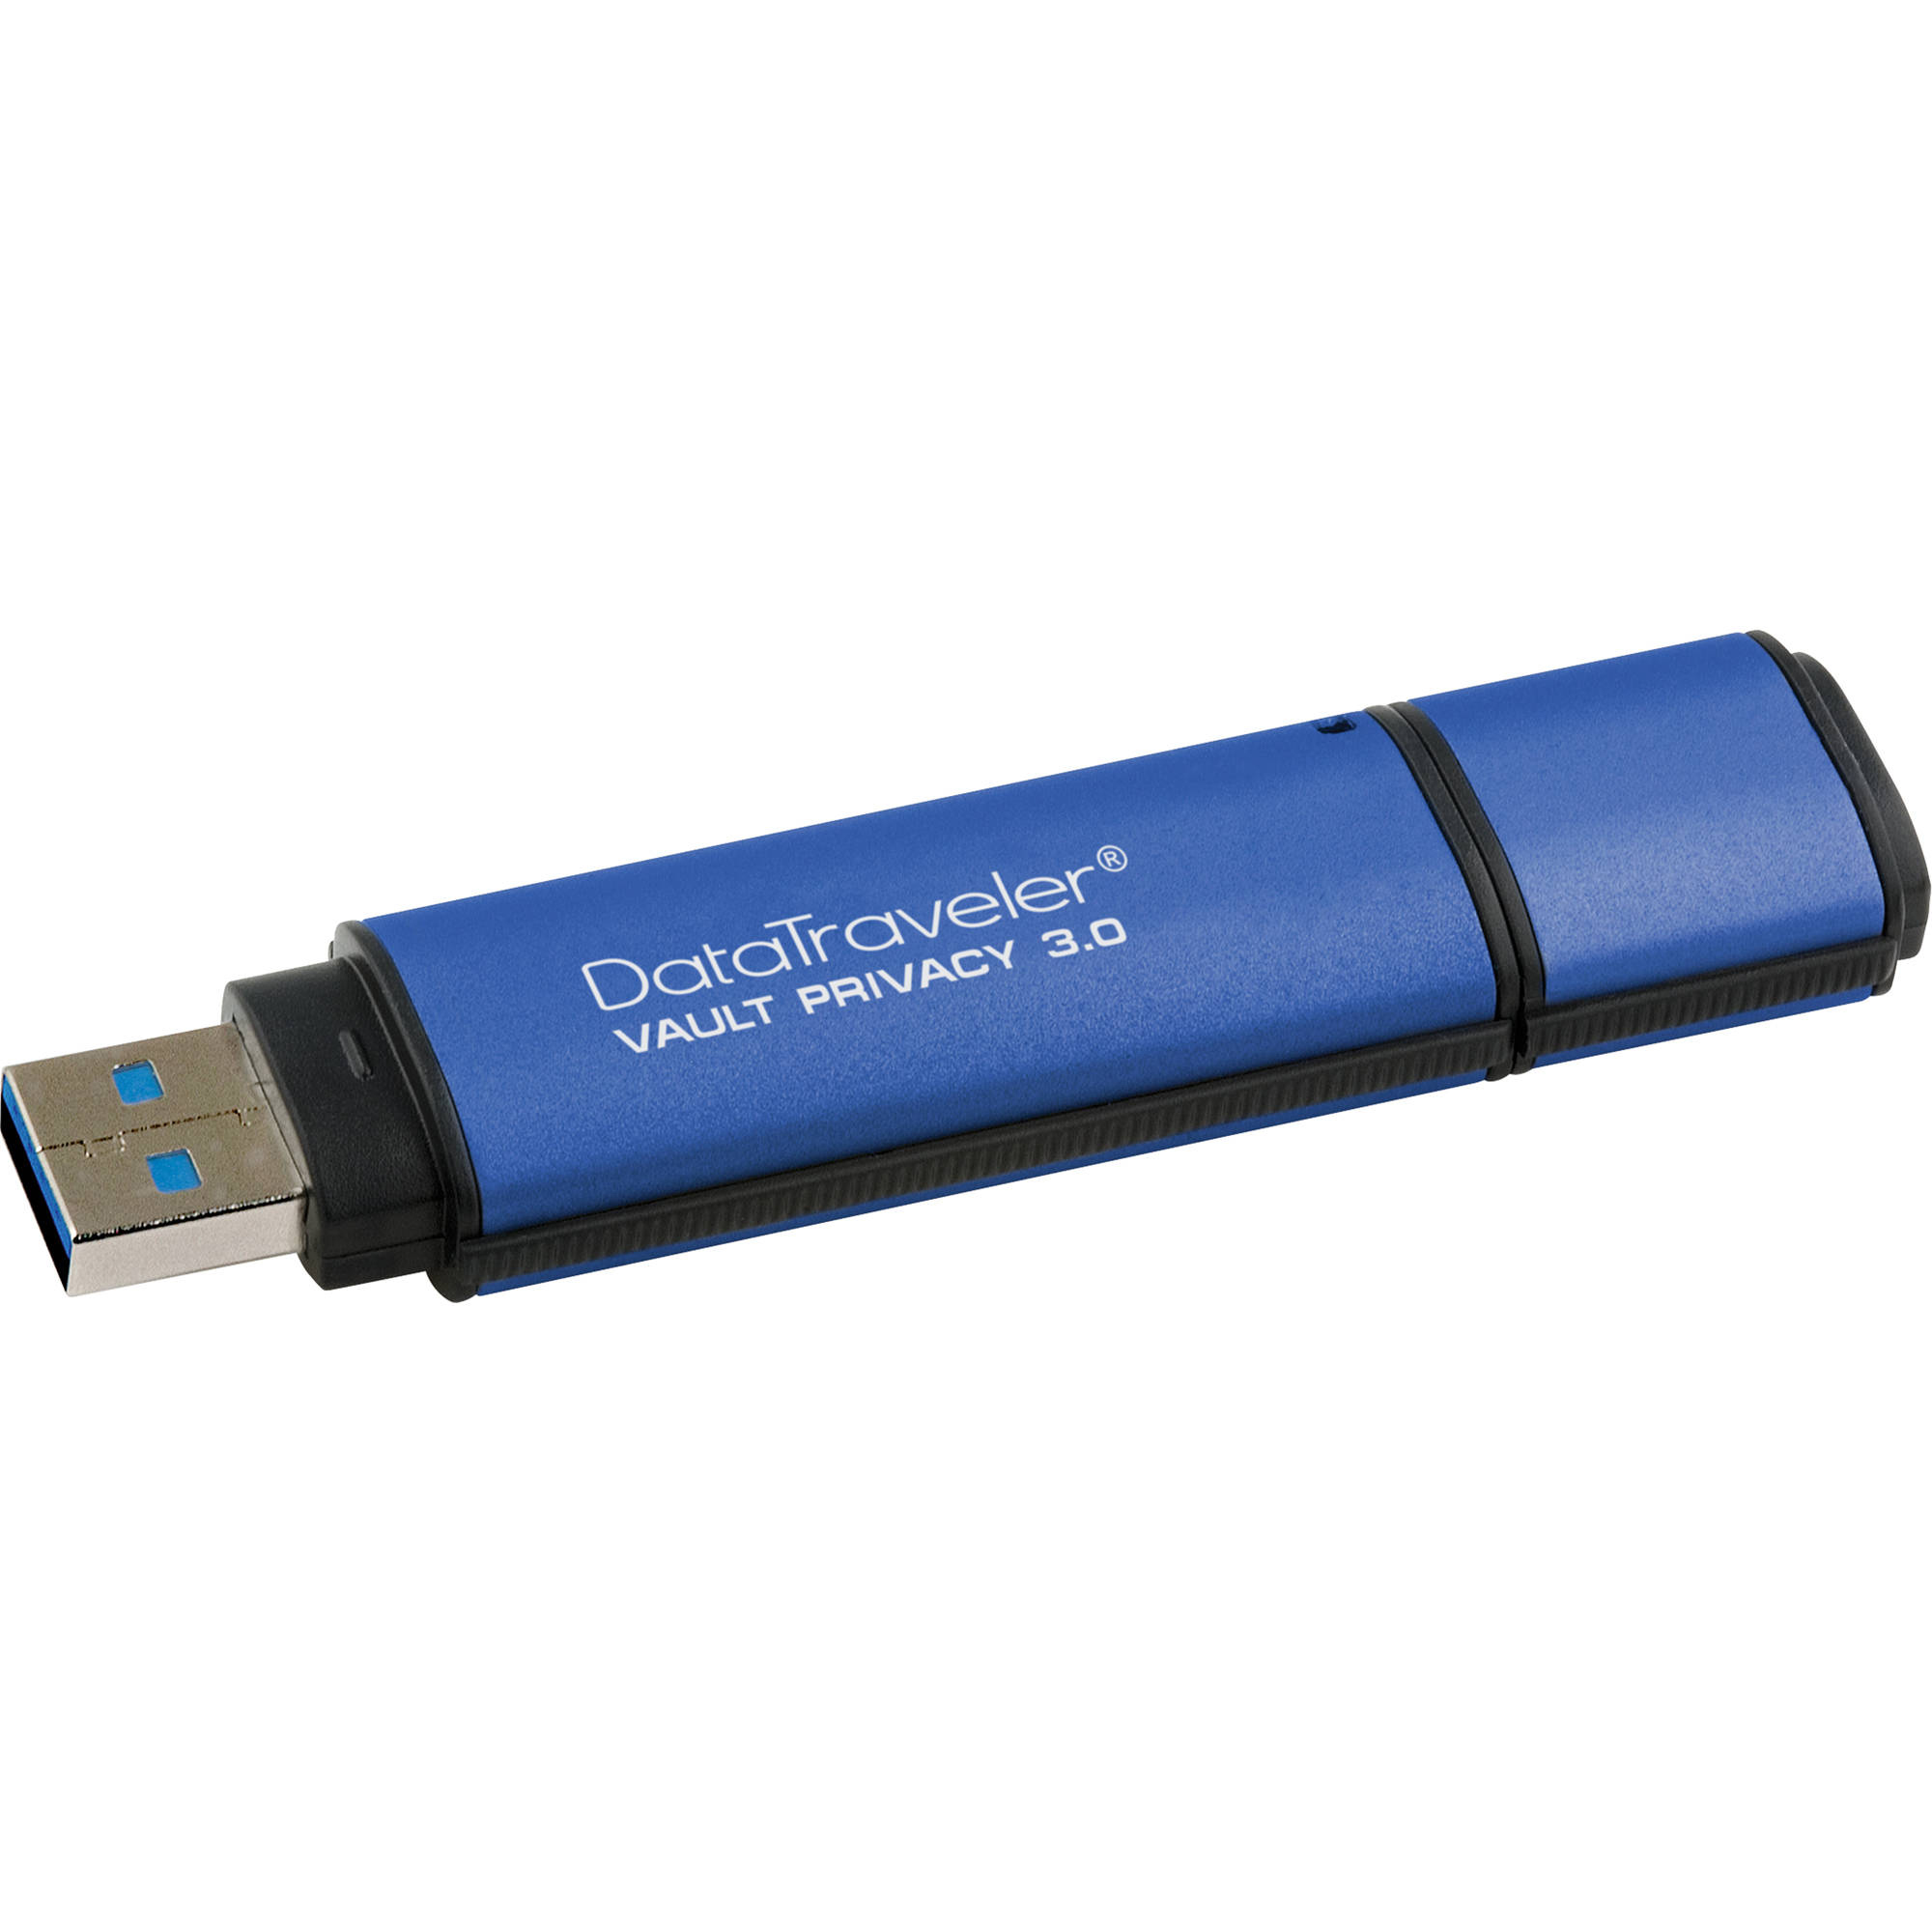 Original Kingston Data Traveler Vault Privacy 8GB USB 3.0 Flash Drive (DTVP30/8GB)